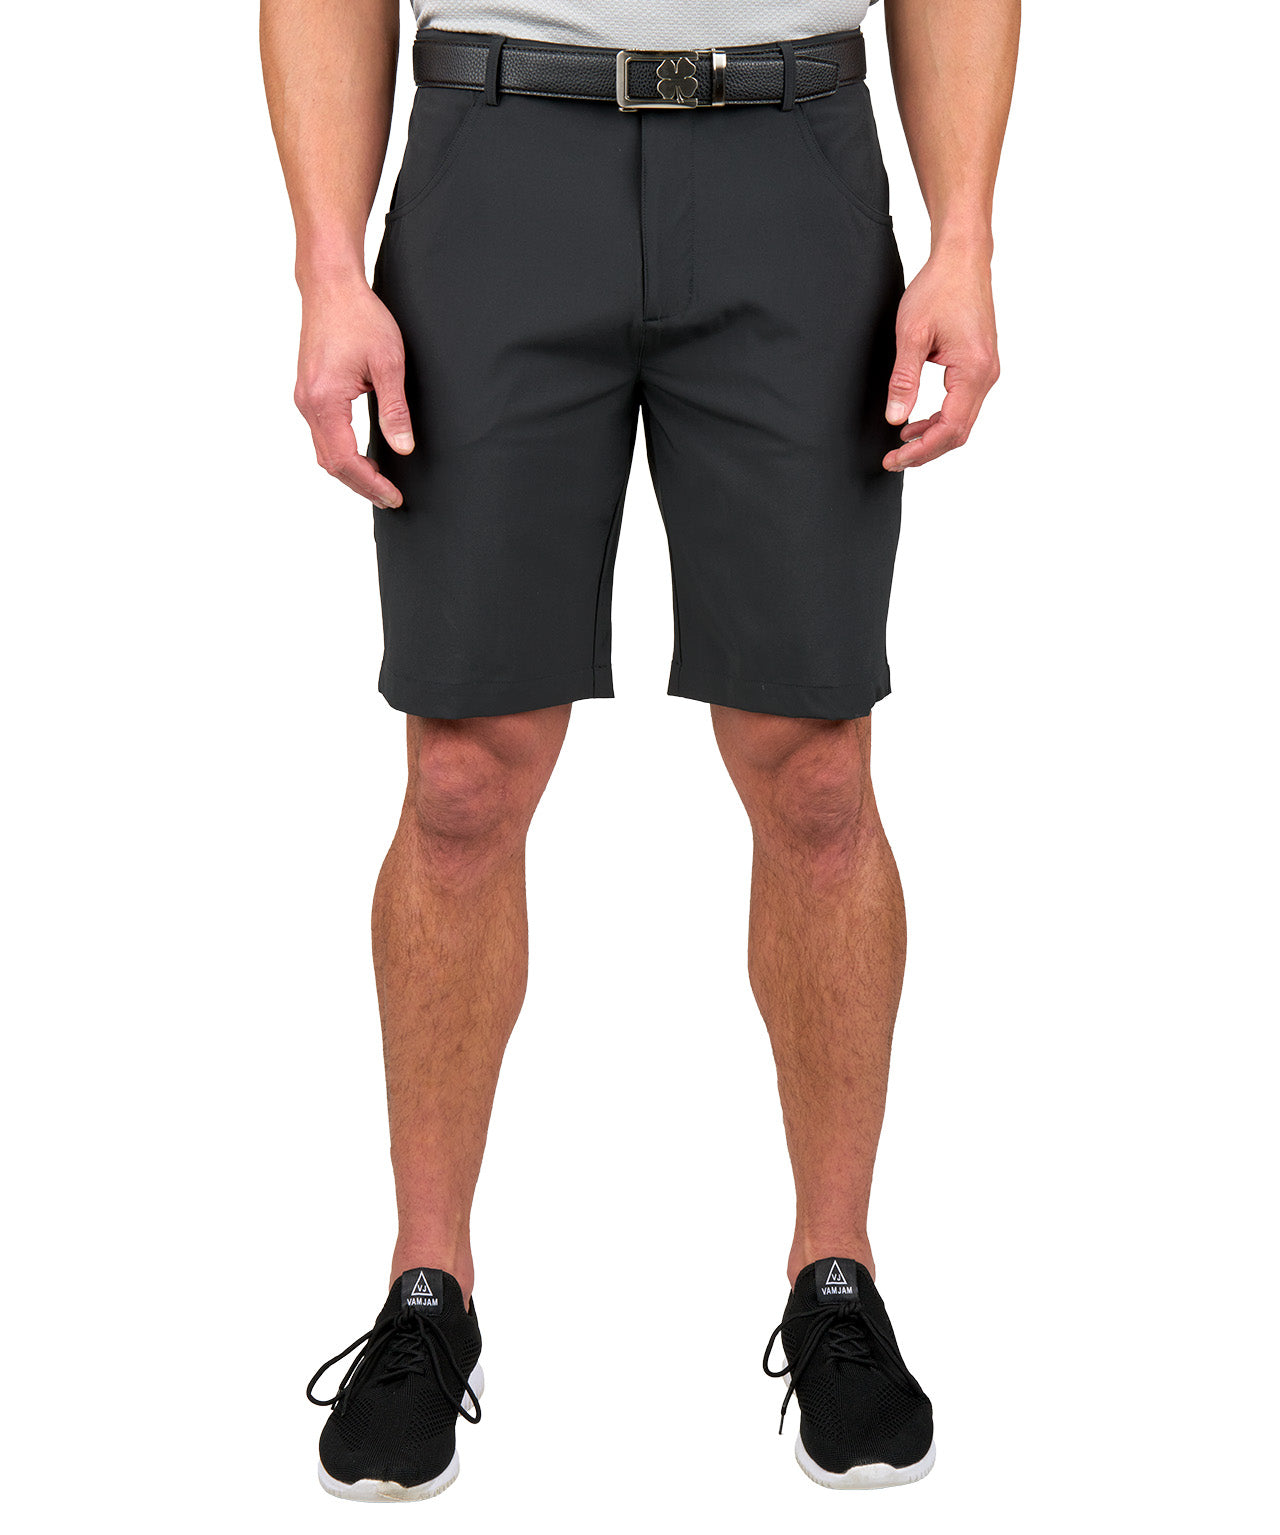 Shorts – Black Clover